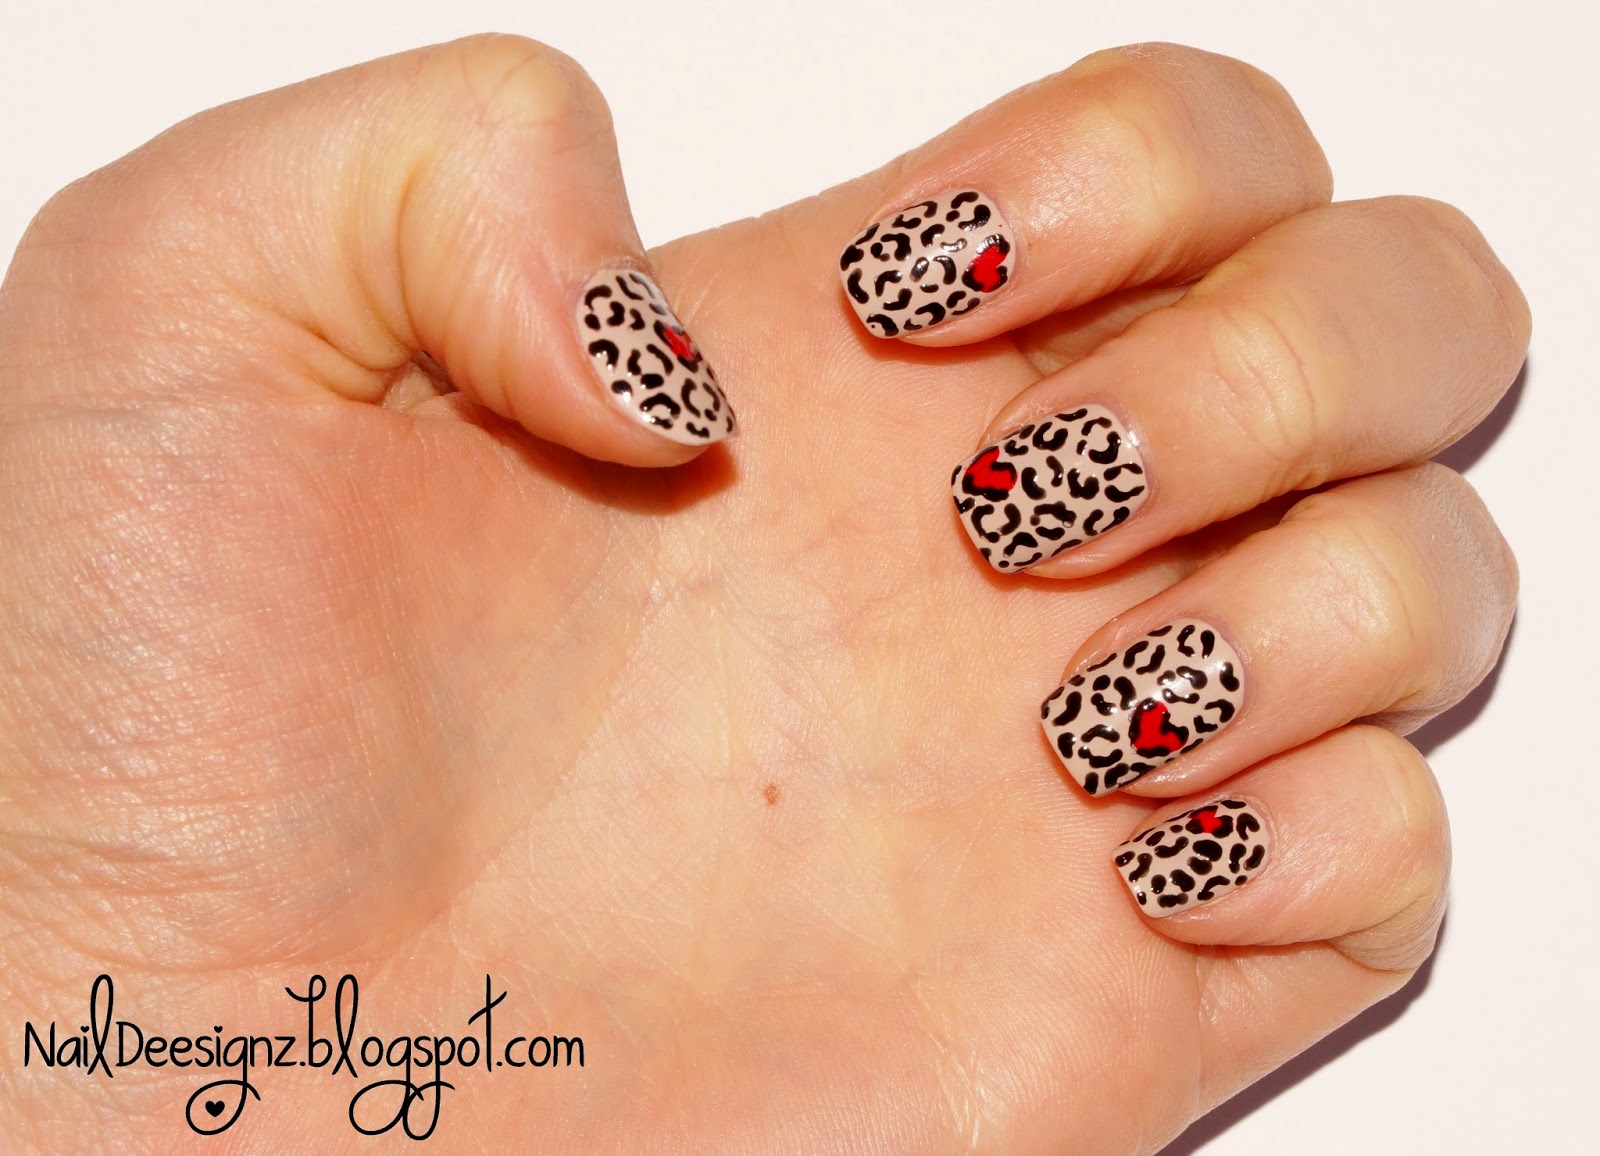 NailDeesignz Valentine's Leopard Print Nail Art